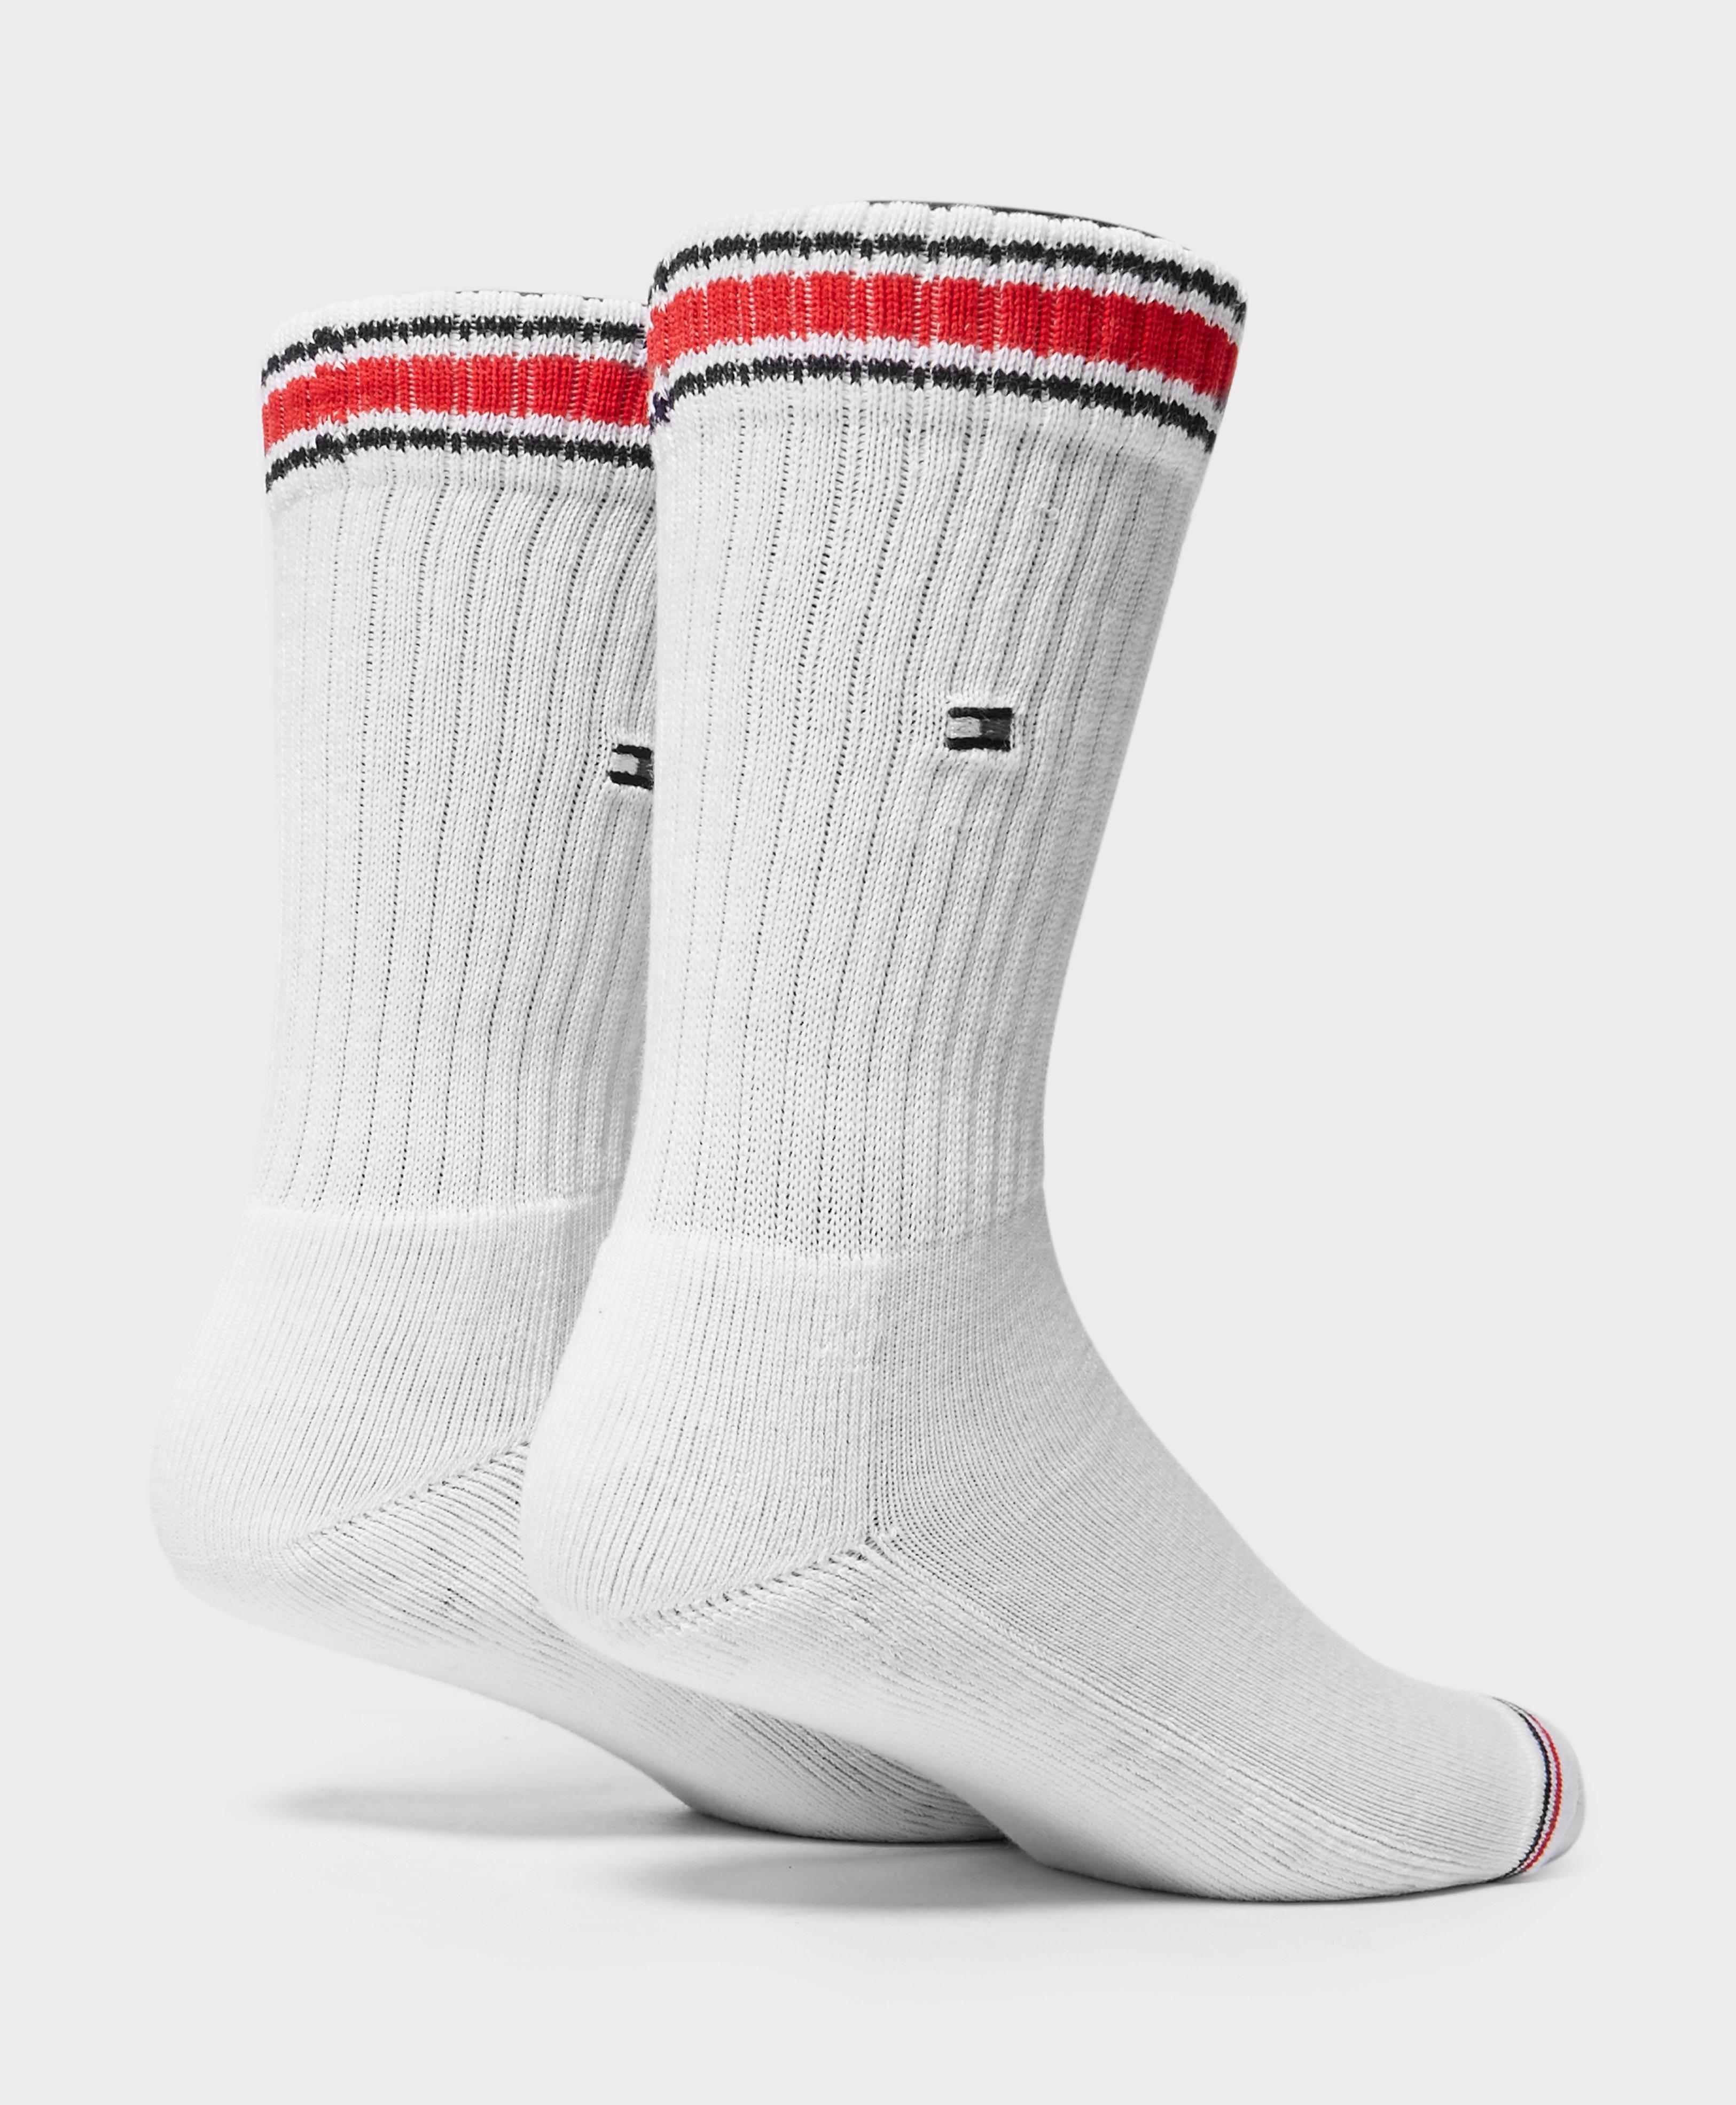 Lyst - Tommy Hilfiger 2-pack Crew Socks in White for Men